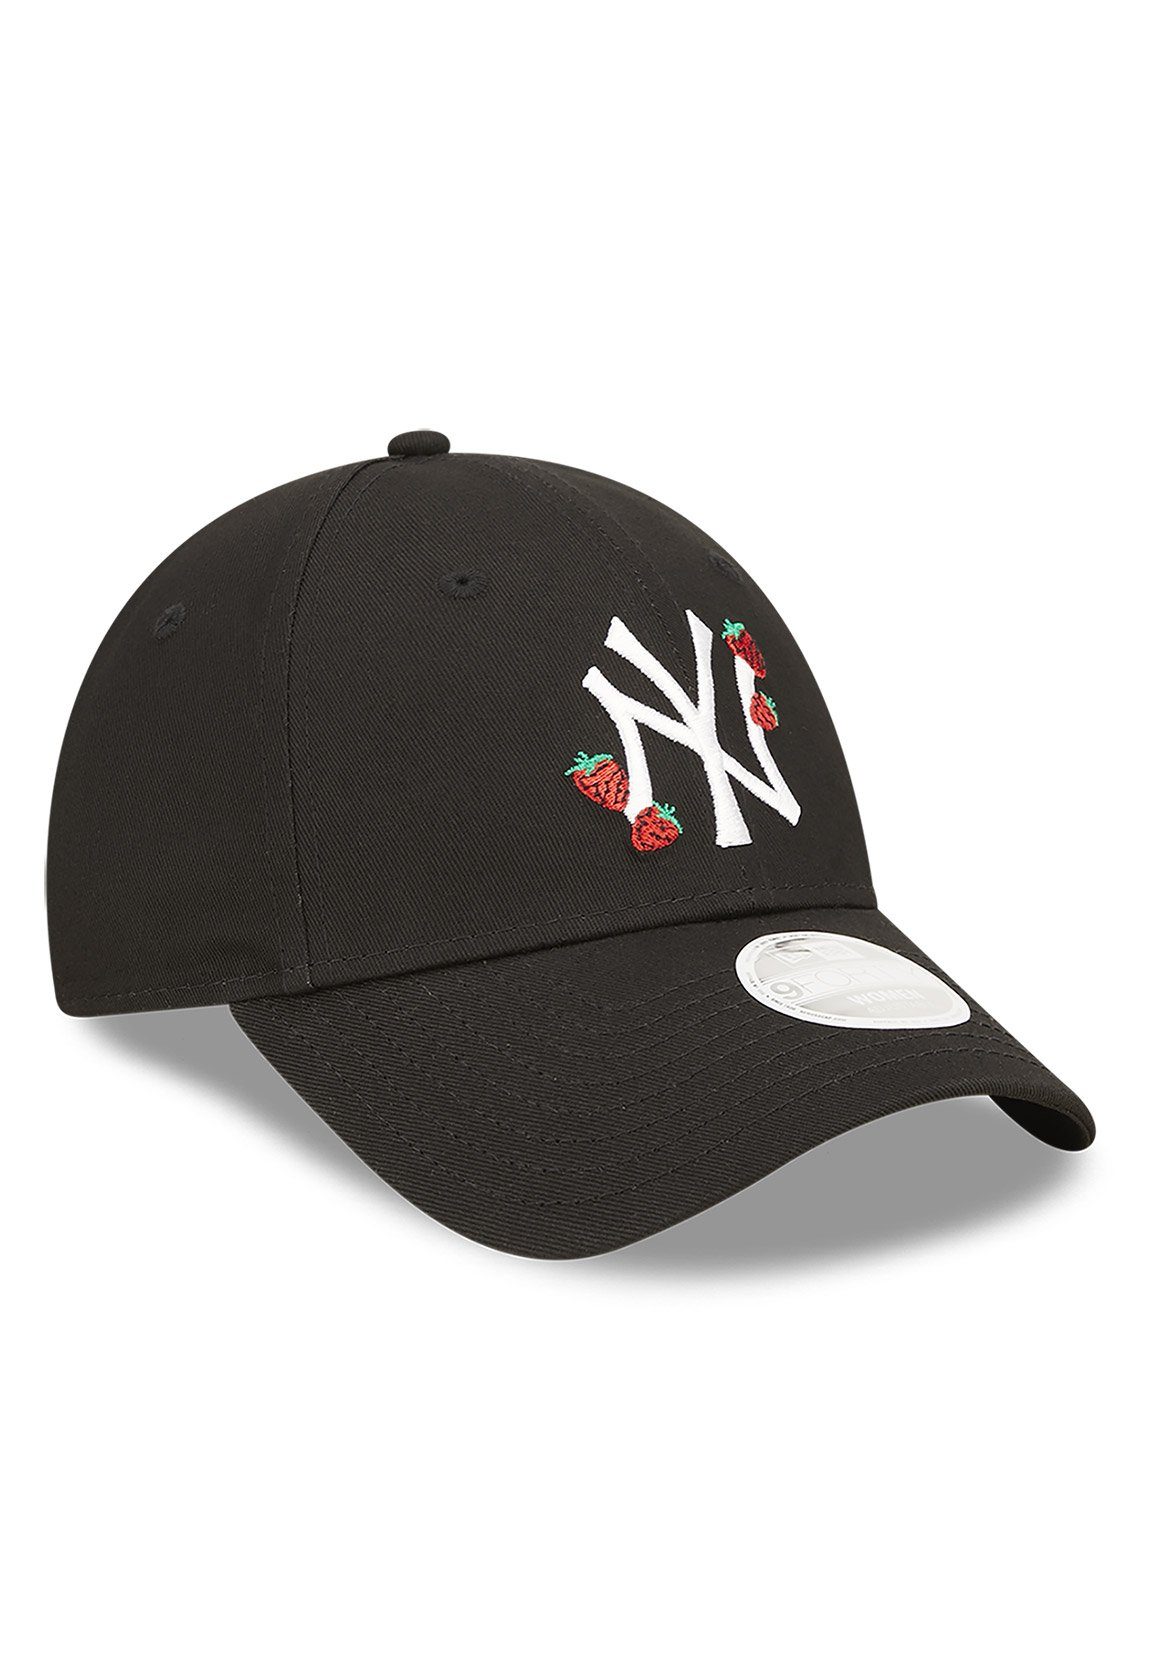 Strawberry New Damen Cap Adjustable Wmns NY New Era Baseball Cap YANKEES Era 9Forty